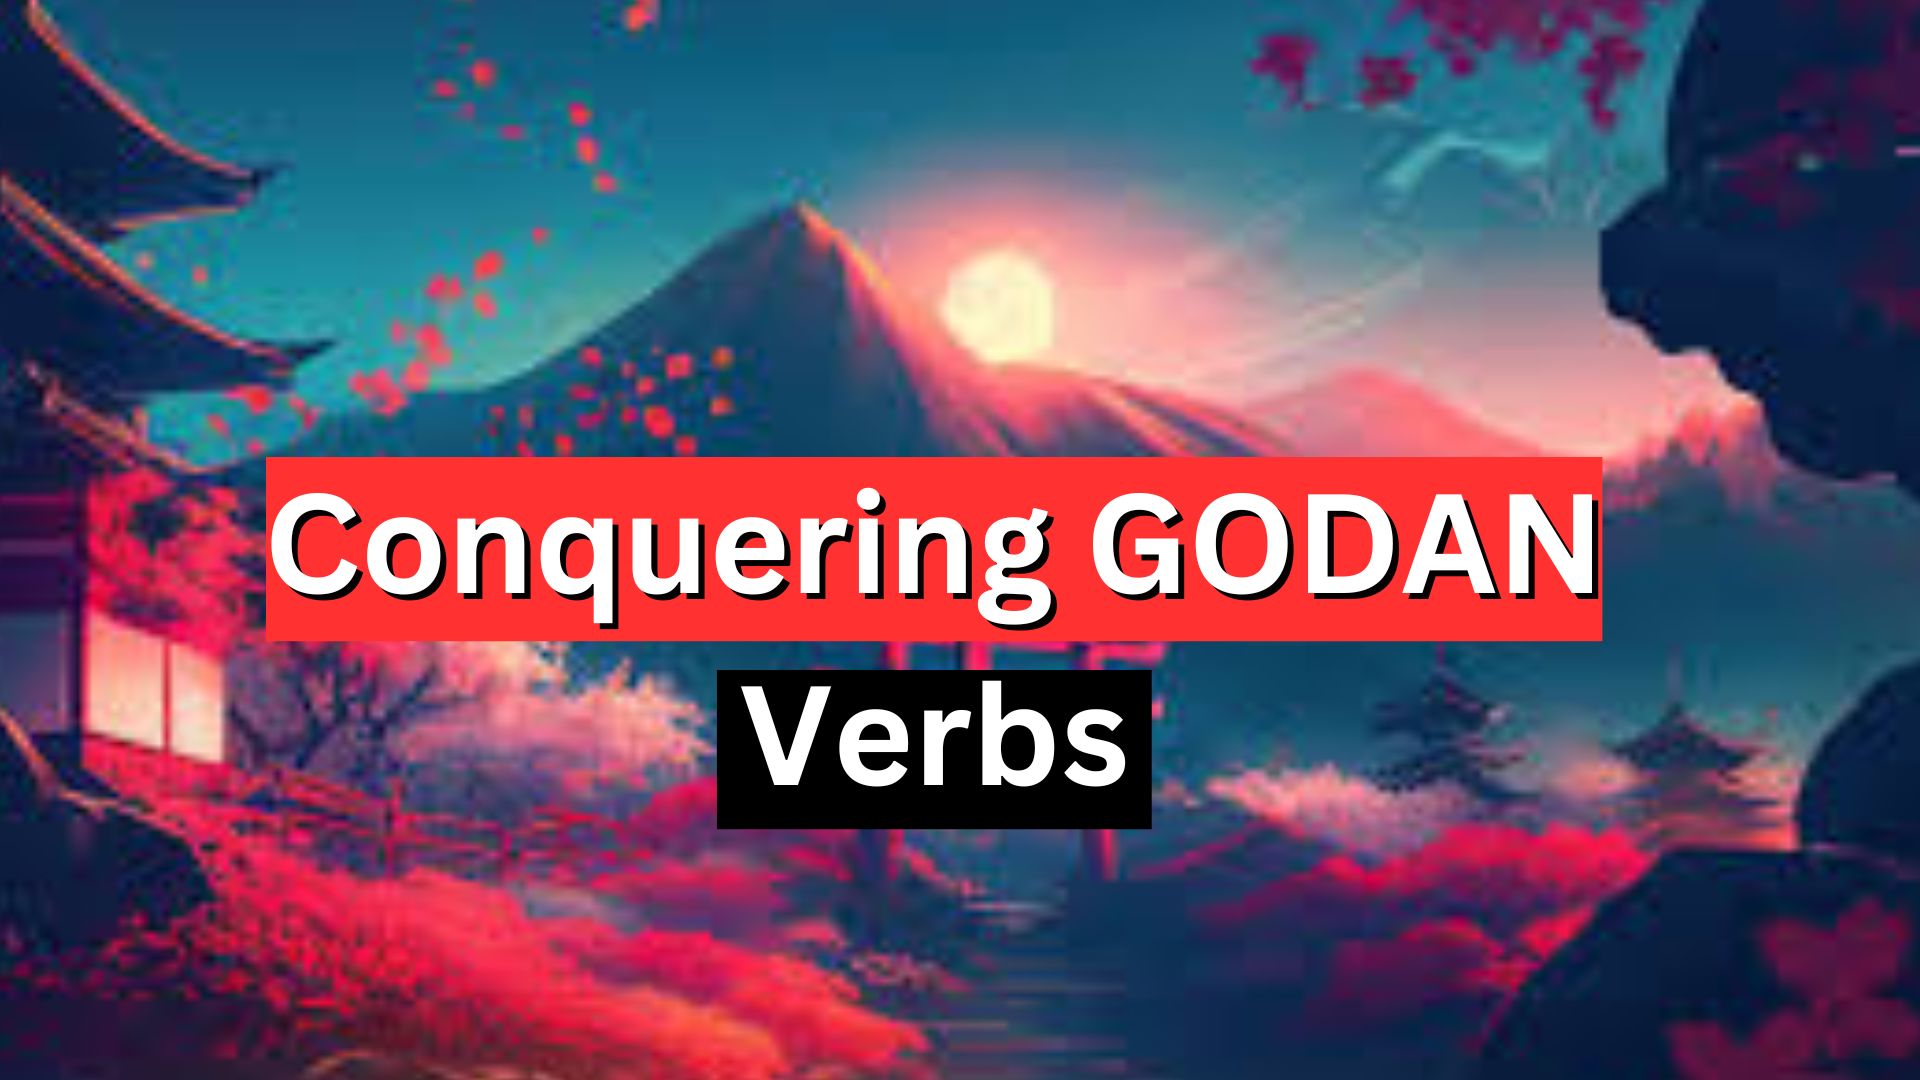 Conquering Godan Verbs: